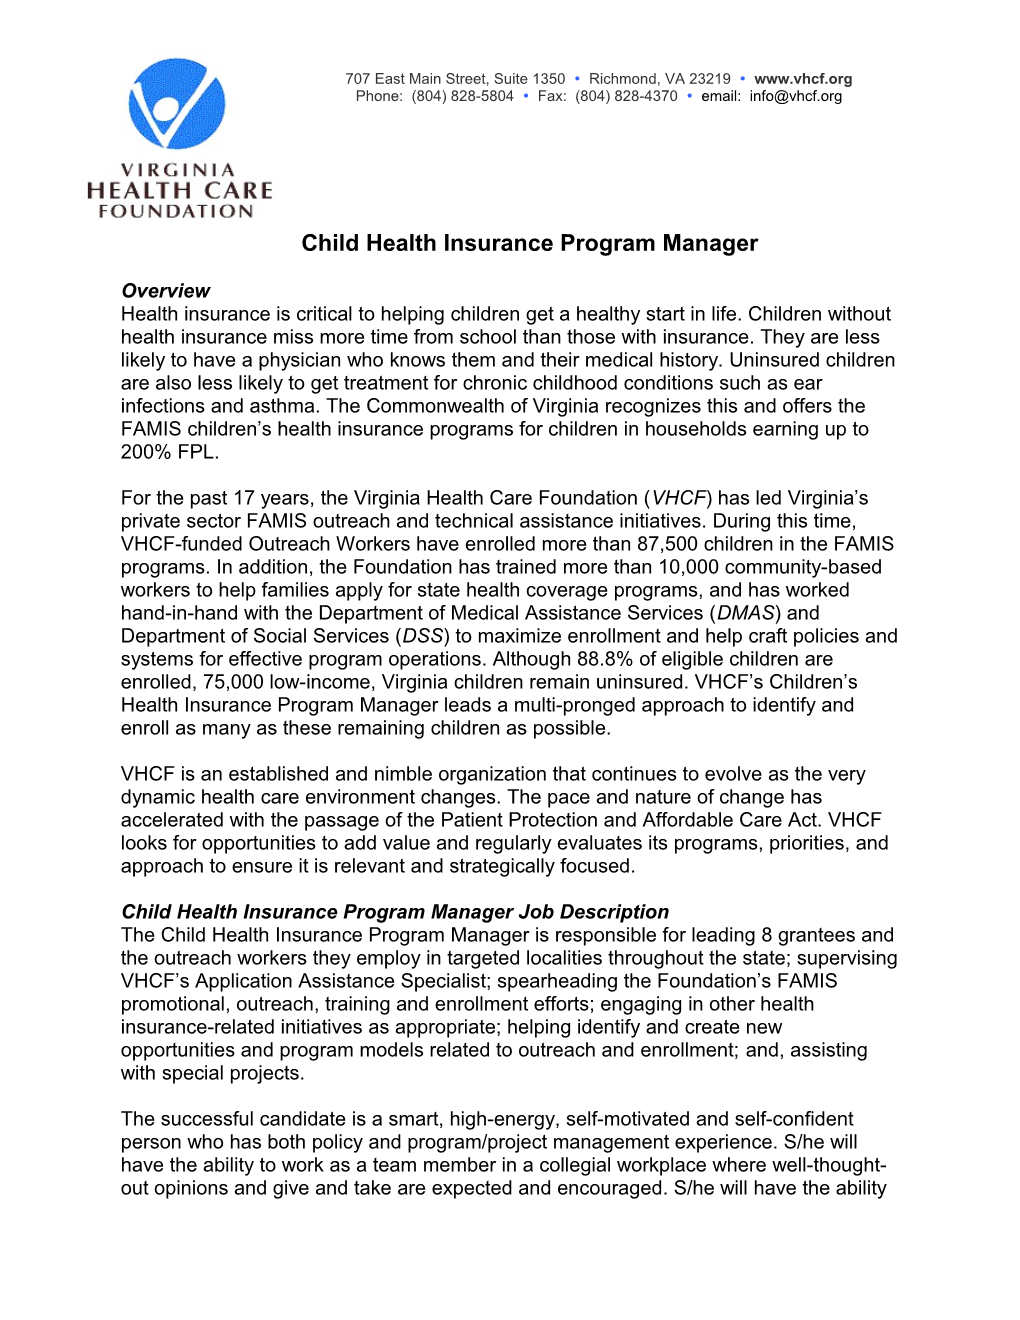 Child Health Insurance Program Manager